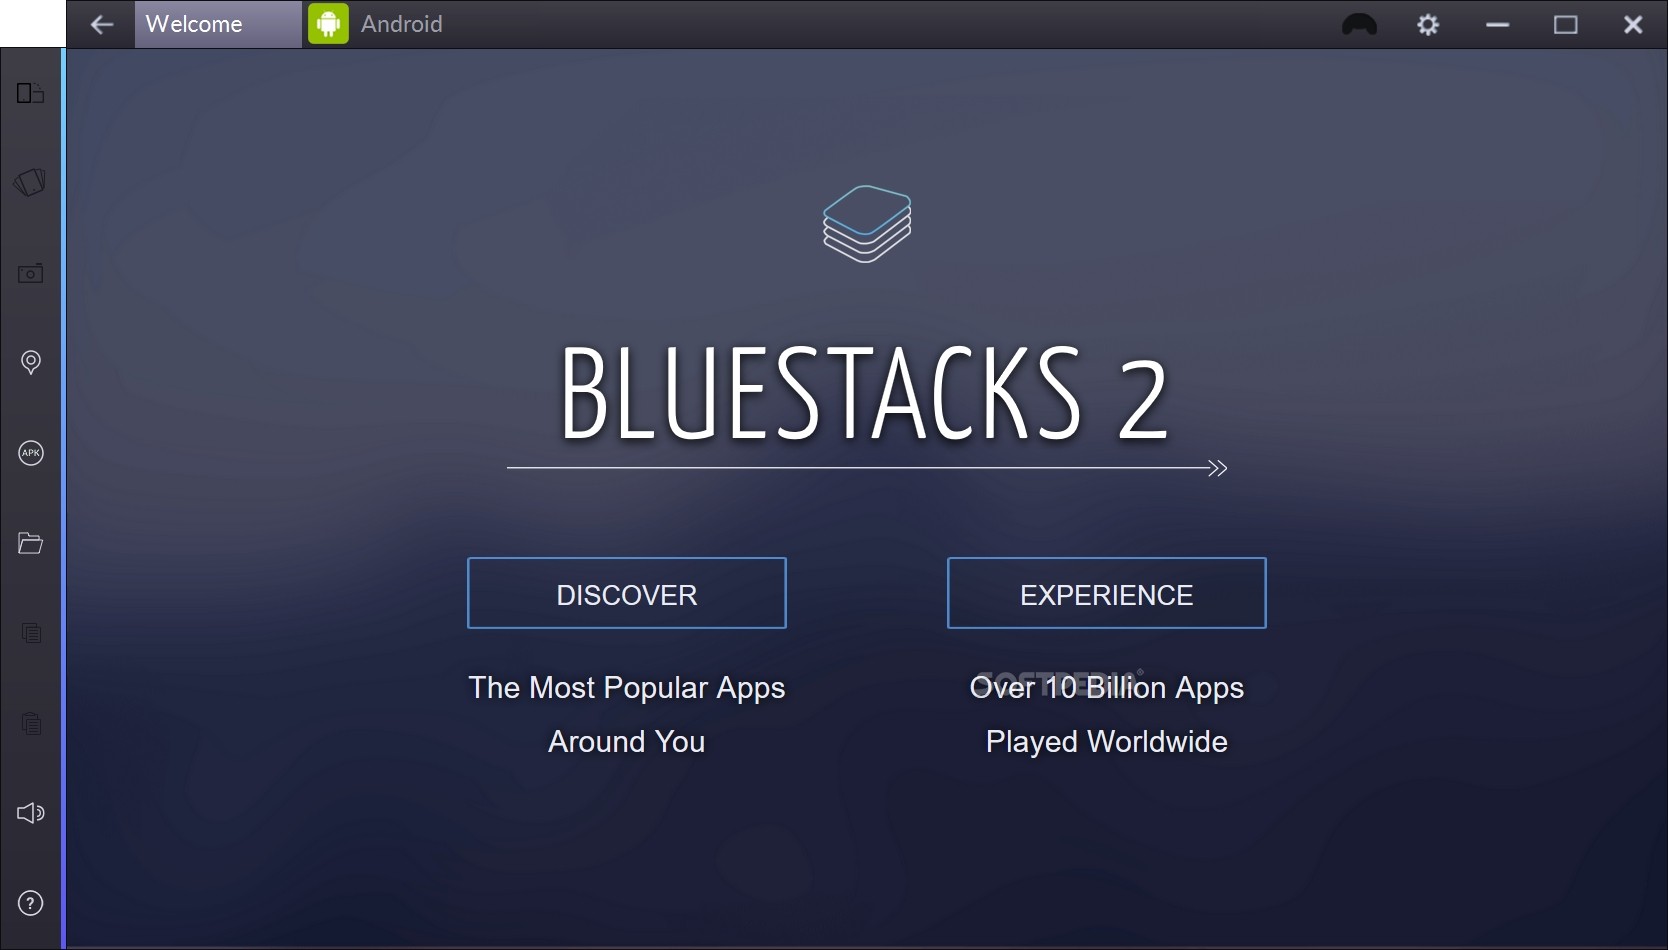 bluestacks download for windows 10 32 bit